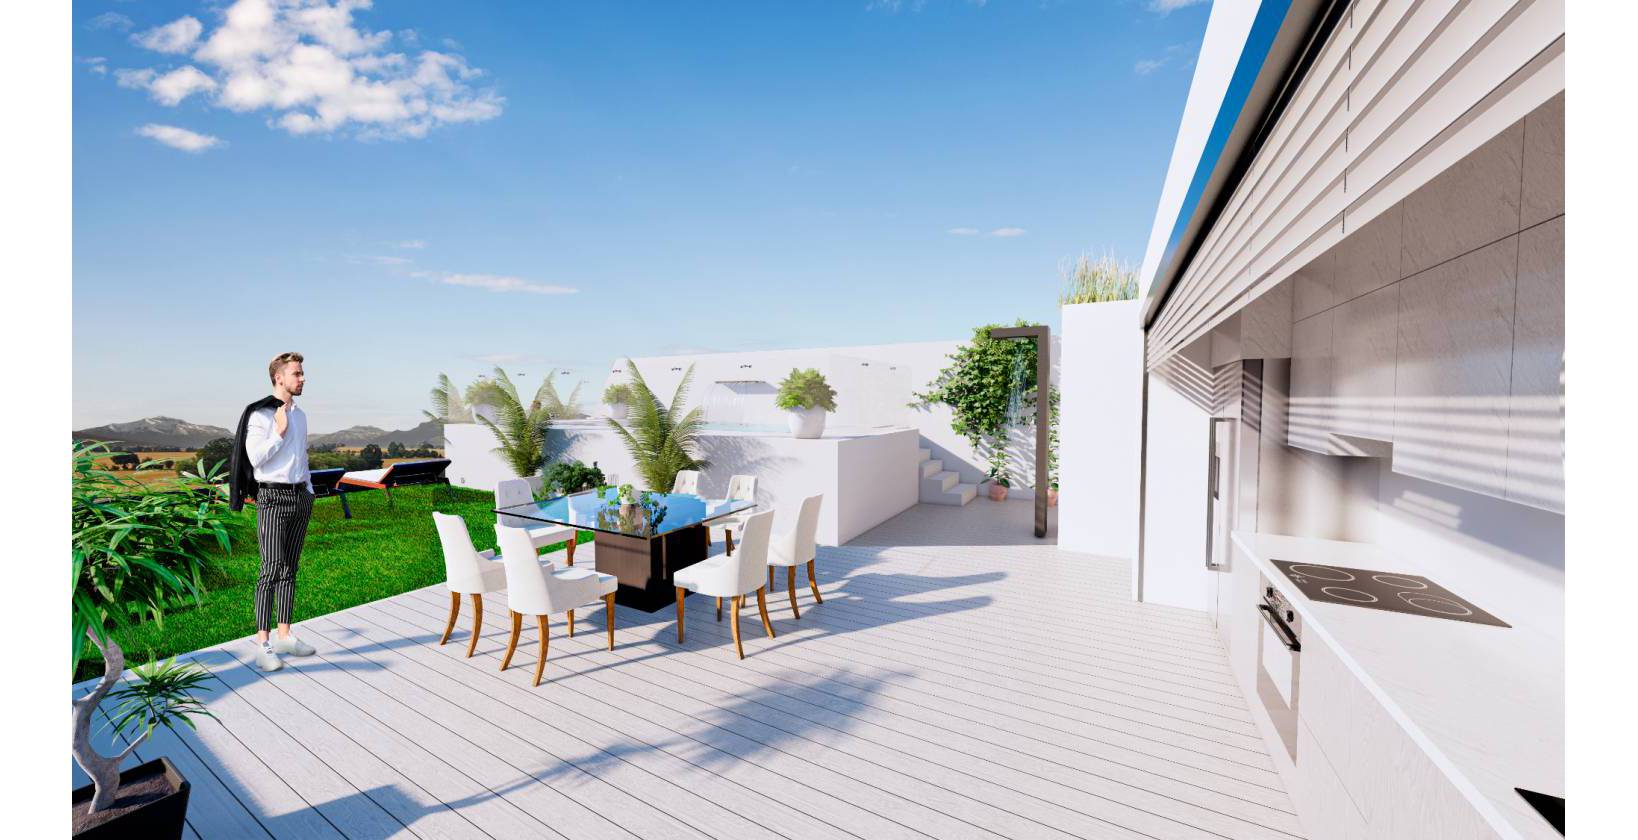 Neubau-Penthouse zum Verkauf an der Costa Blanca